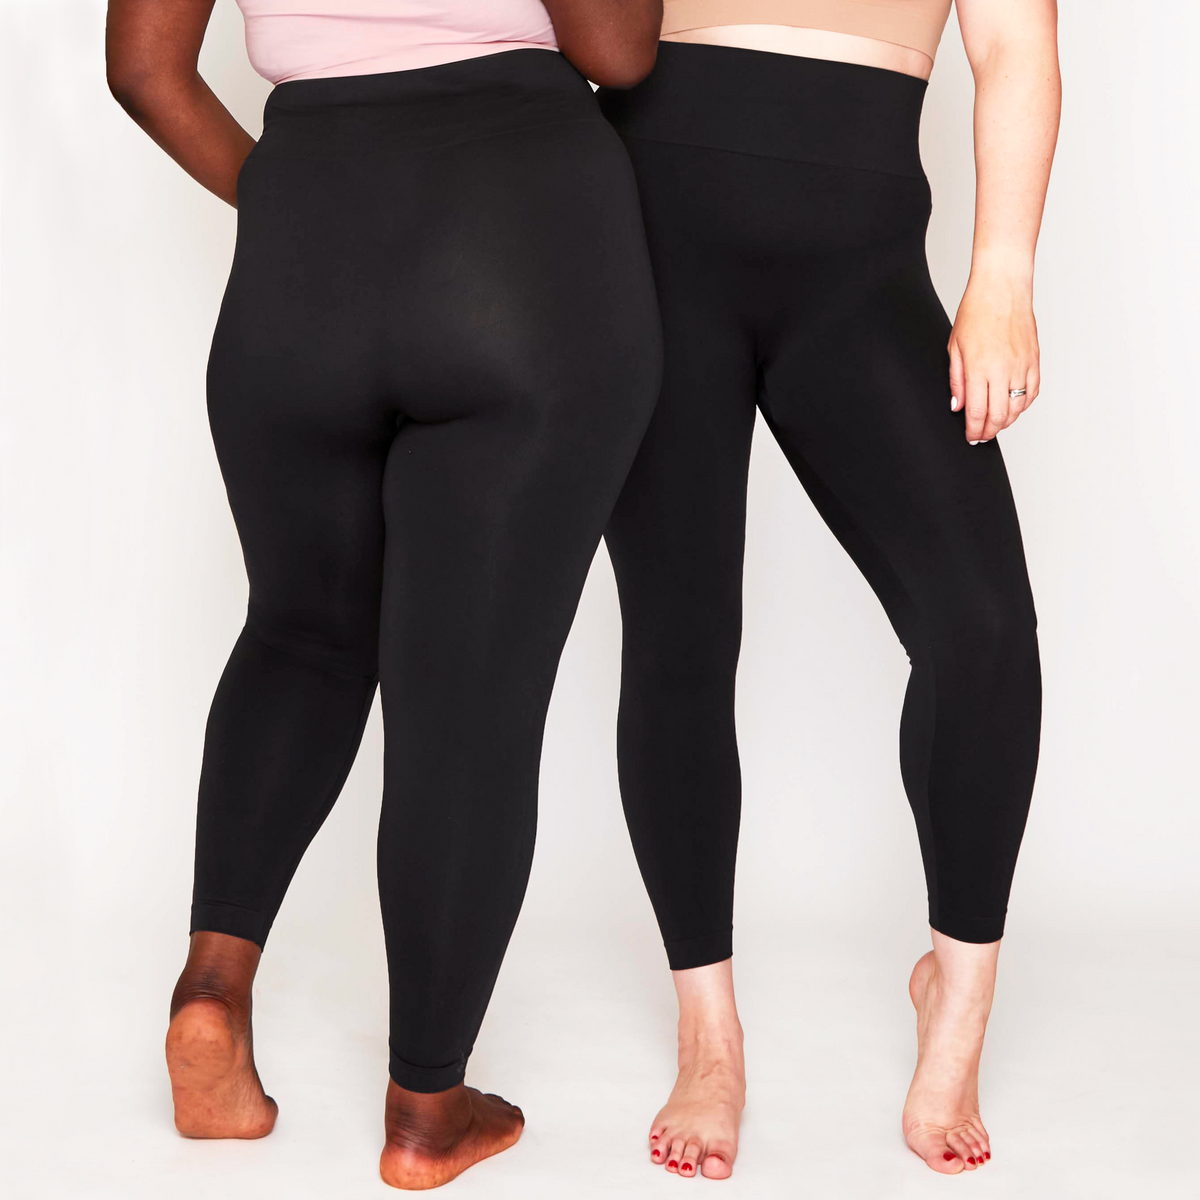 NWT Women's Best Wear CAMO SEAMLESS LEGGINGS COLOR: Black Size M